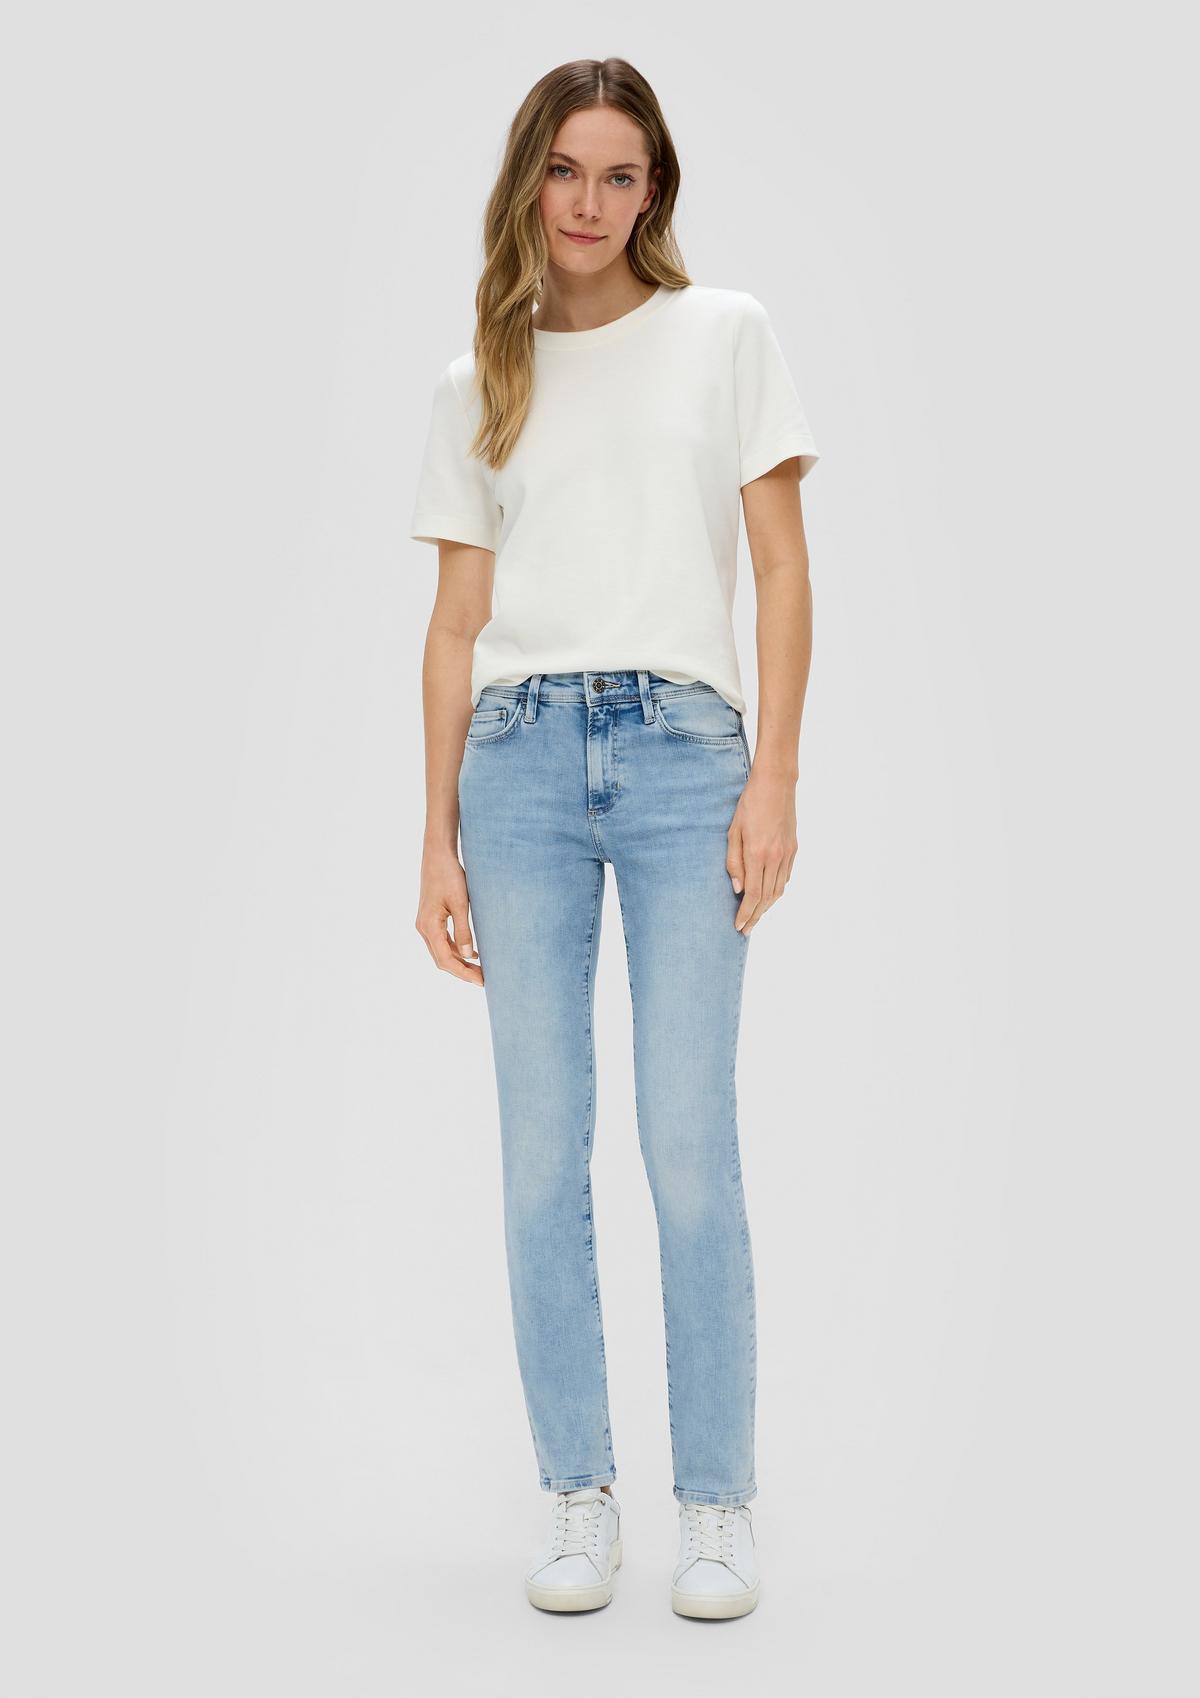 Betsy jeans / slim fit / mid rise / slim leg / stretch cotton